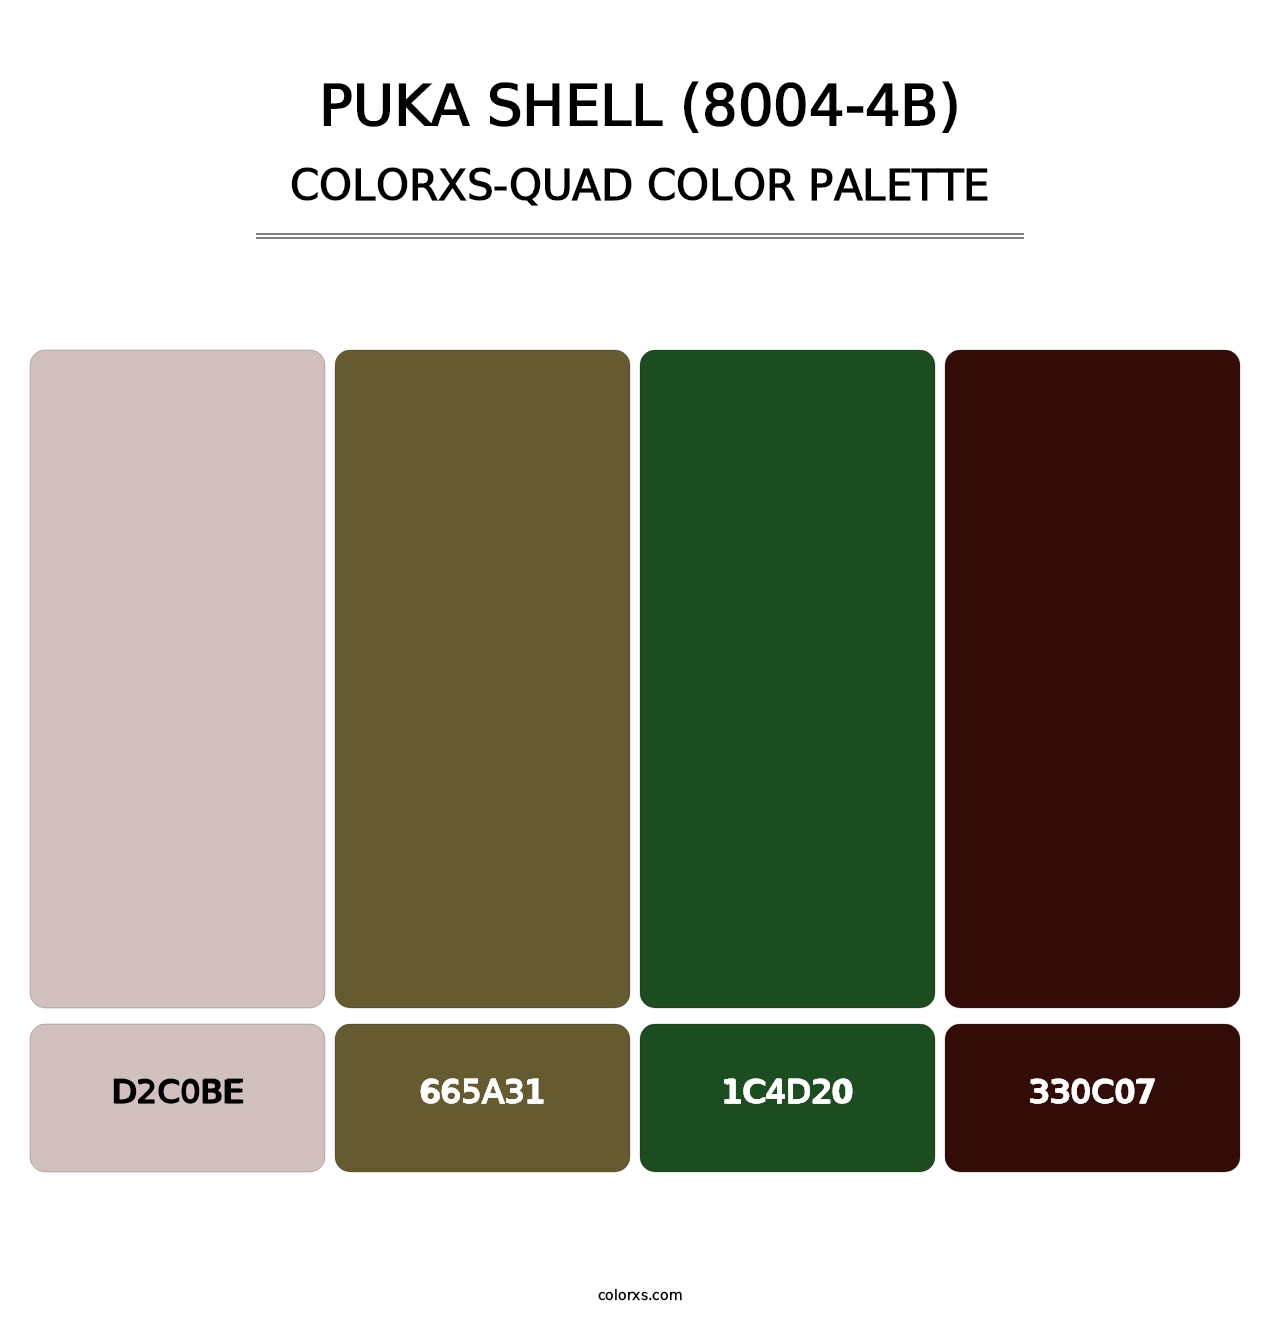 Puka Shell (8004-4B) - Colorxs Quad Palette